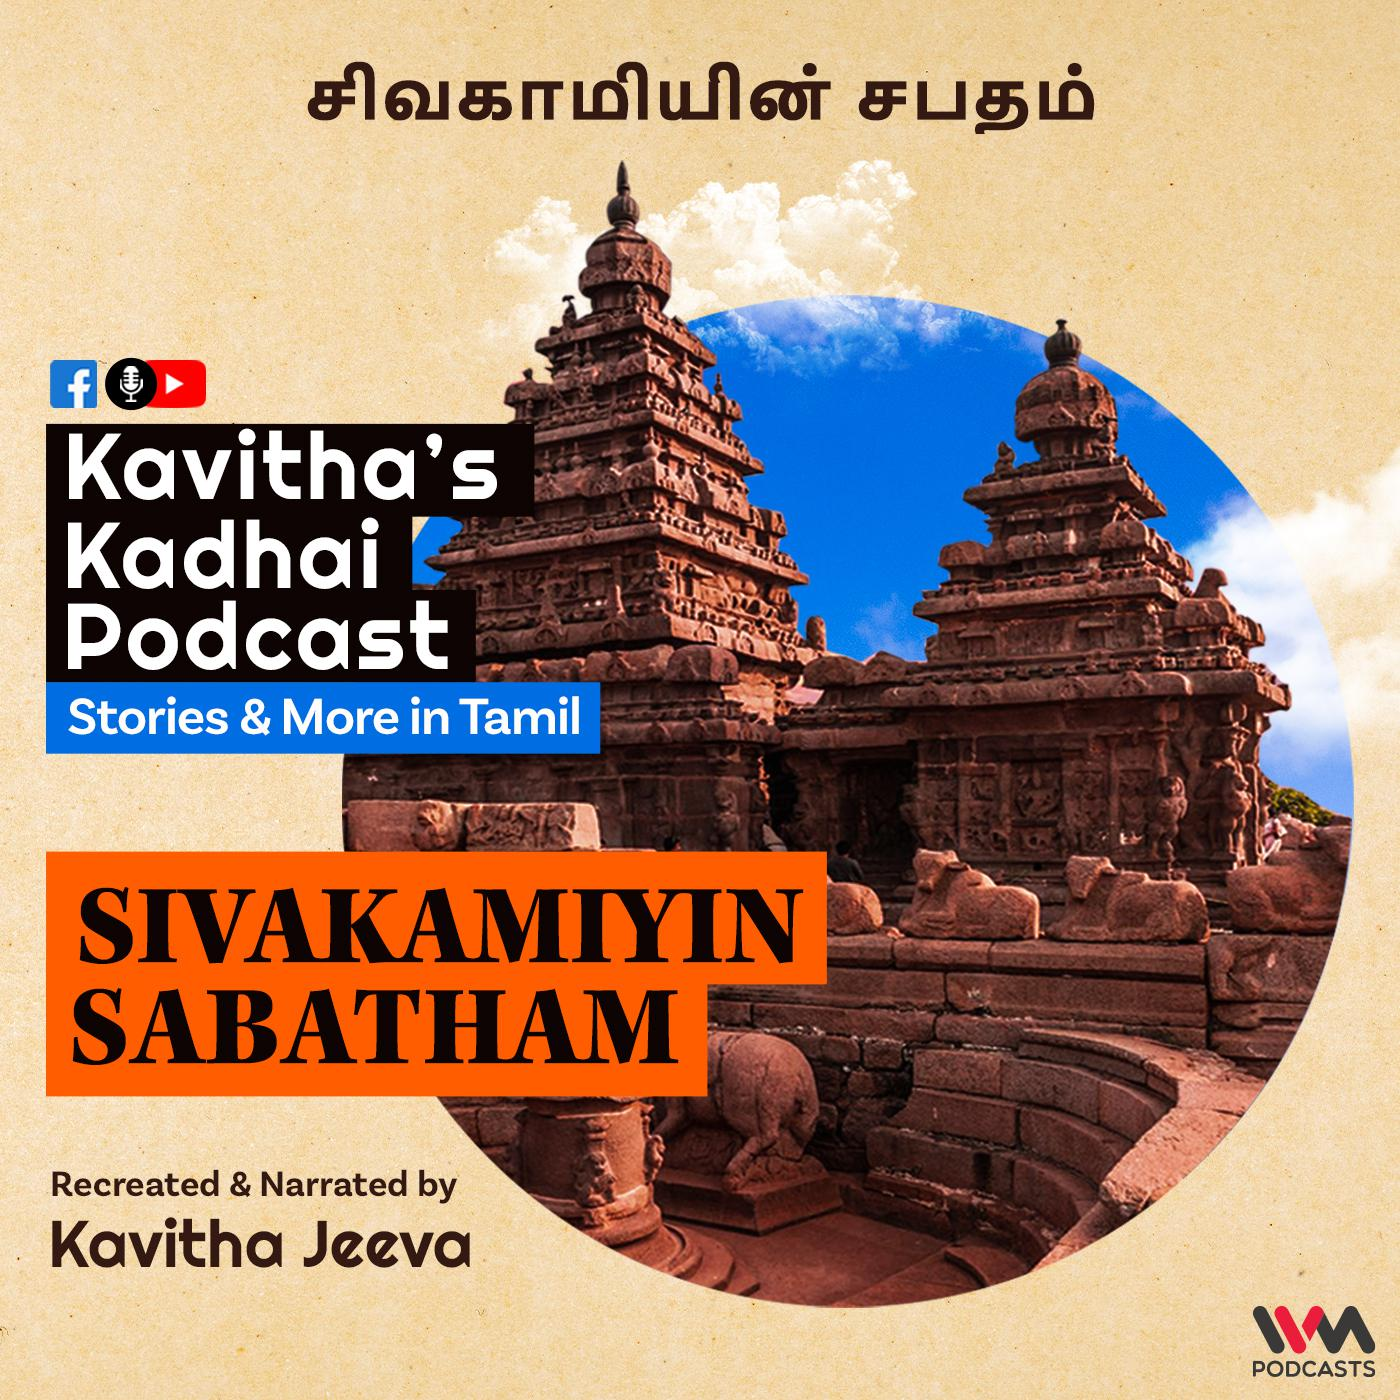 KadhaiPodcast's Sivakamiyin Sabatham with Kavitha Jeeva - Episode #140